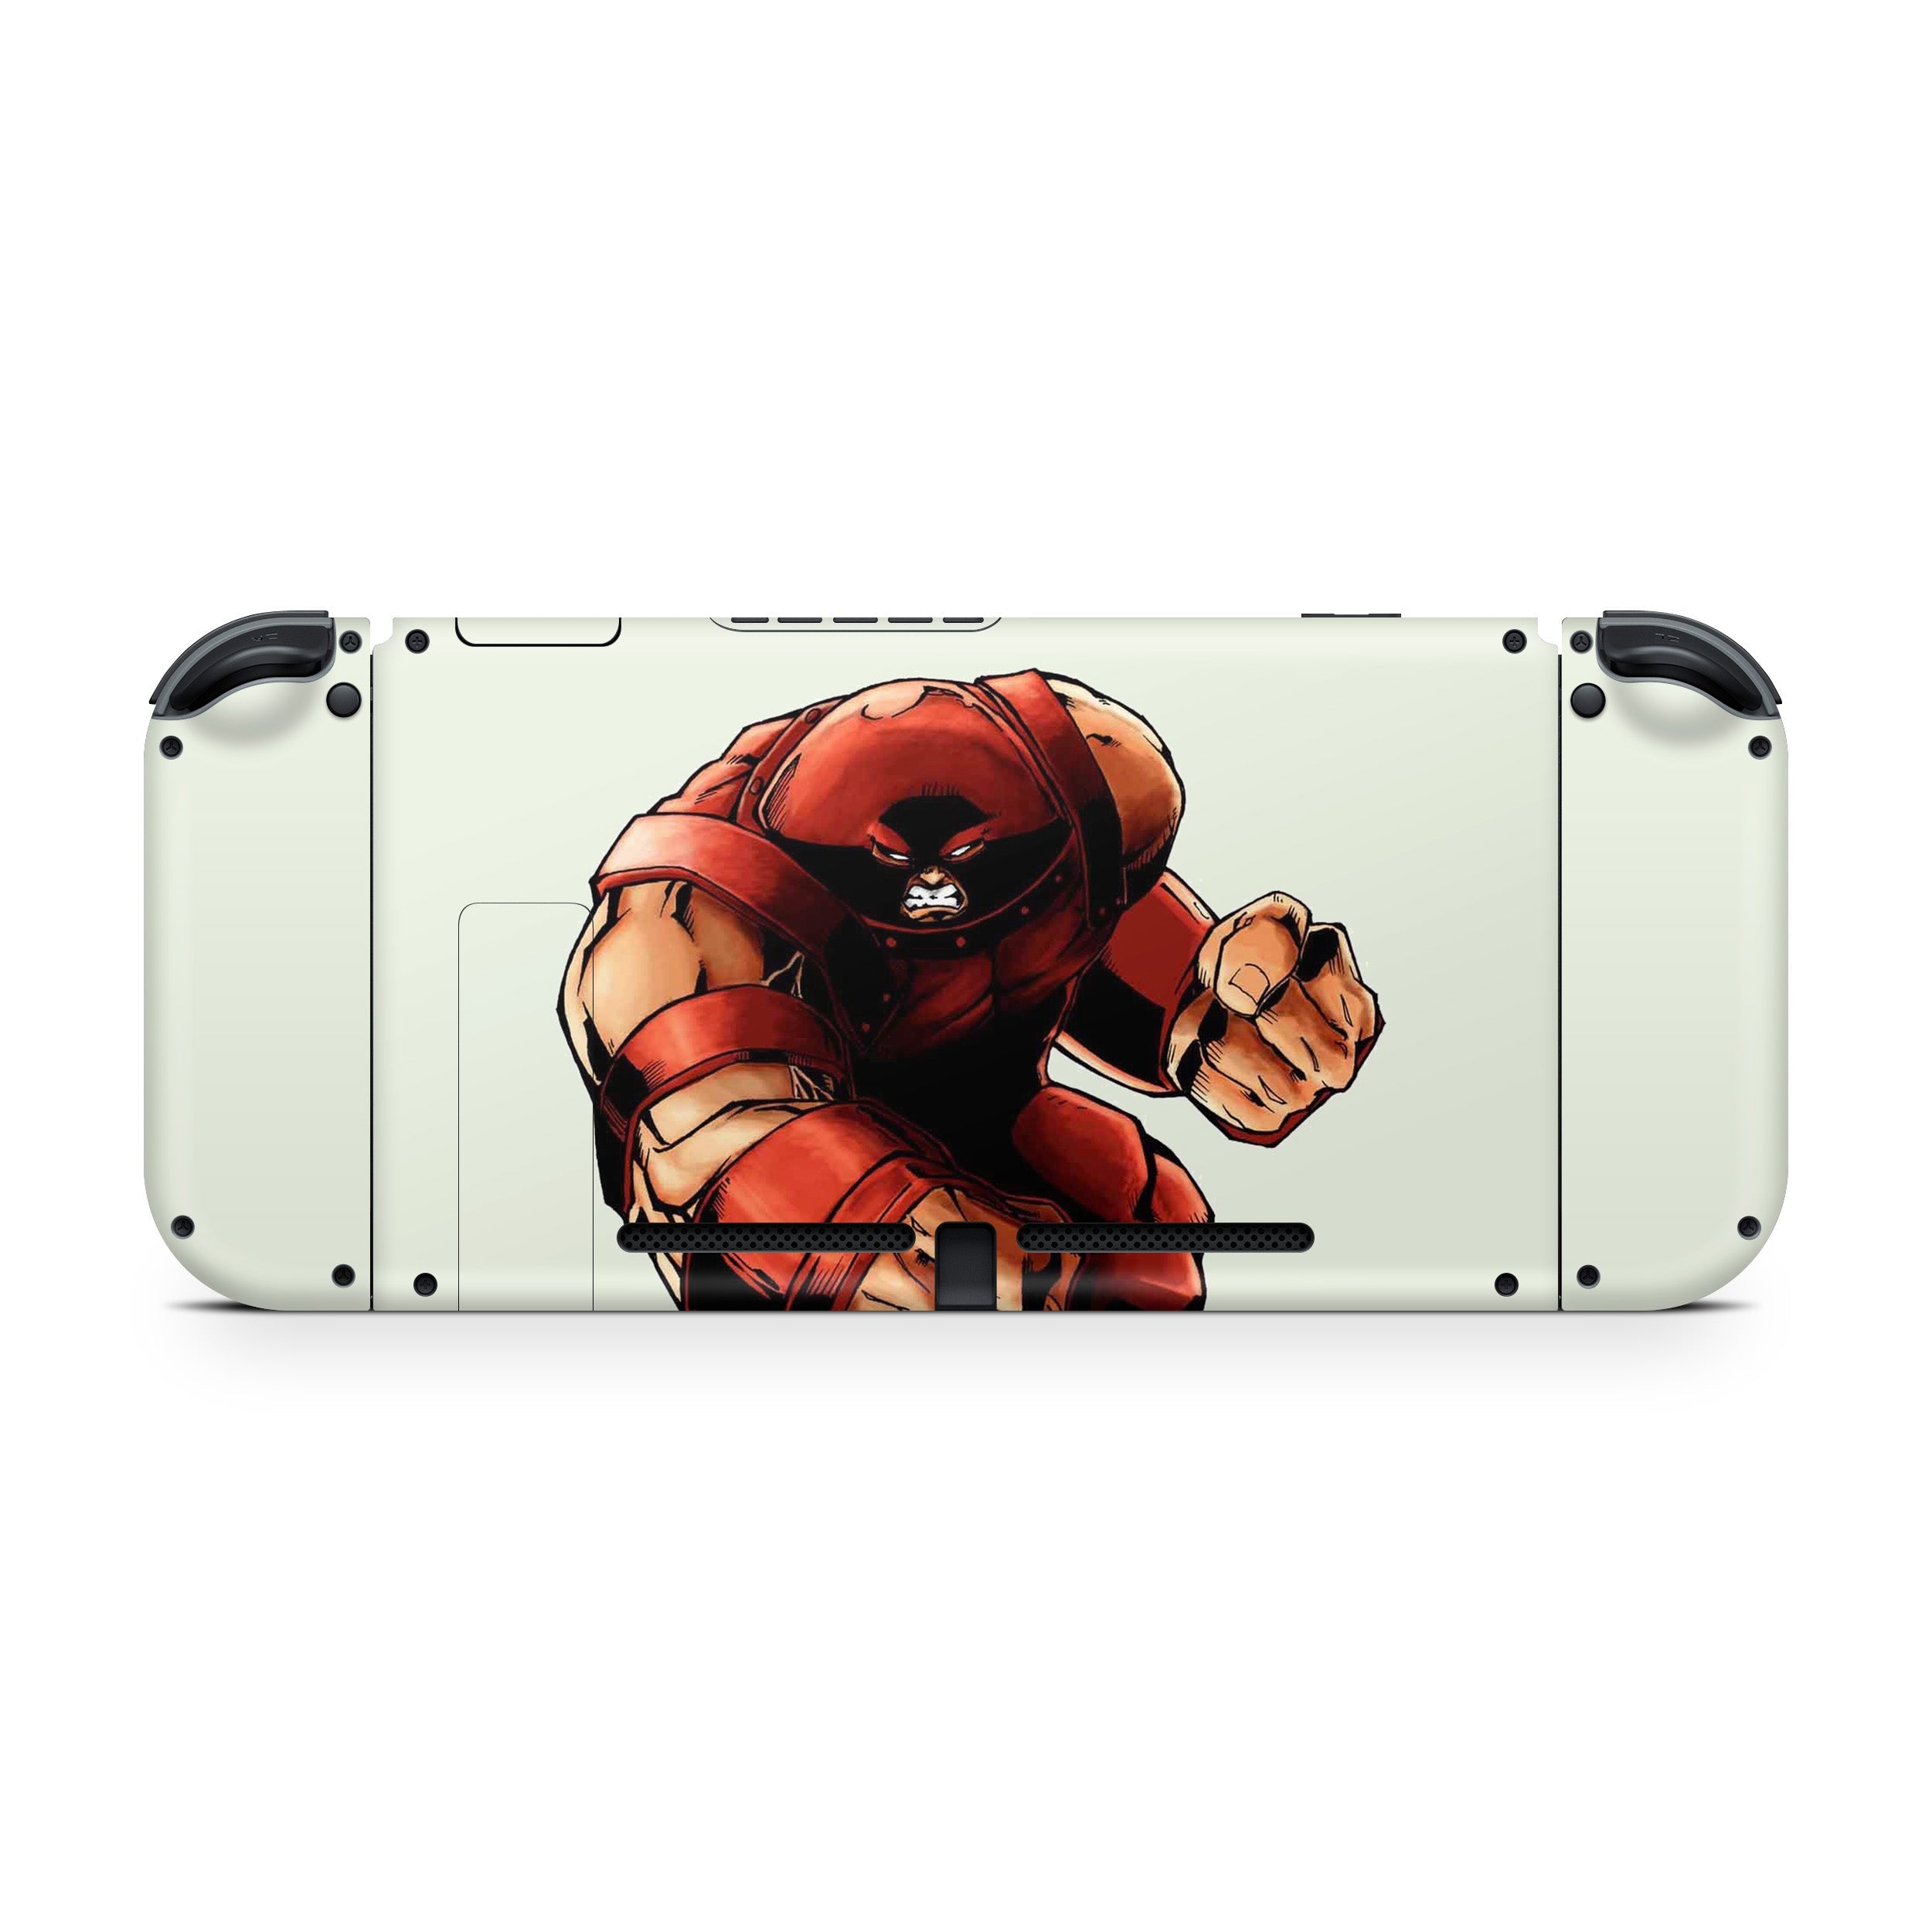 A video game skin featuring a Marvel Comics X Men Juggernaut design for the Nintendo Switch.